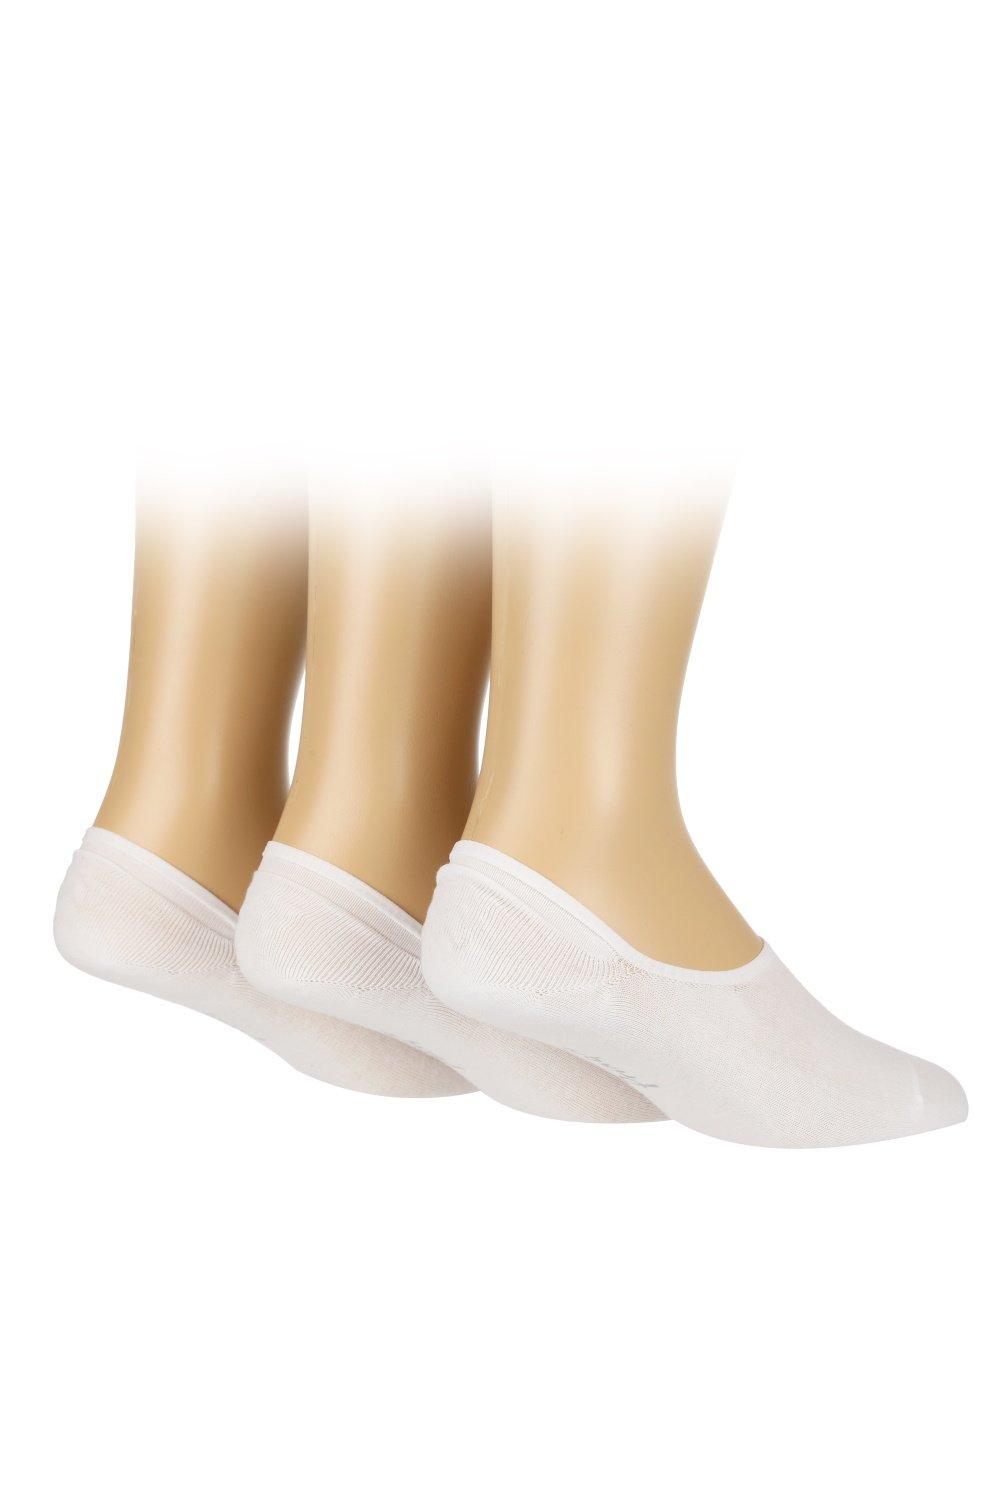 3 Pair Pack Cotton Shoe Liner Socks